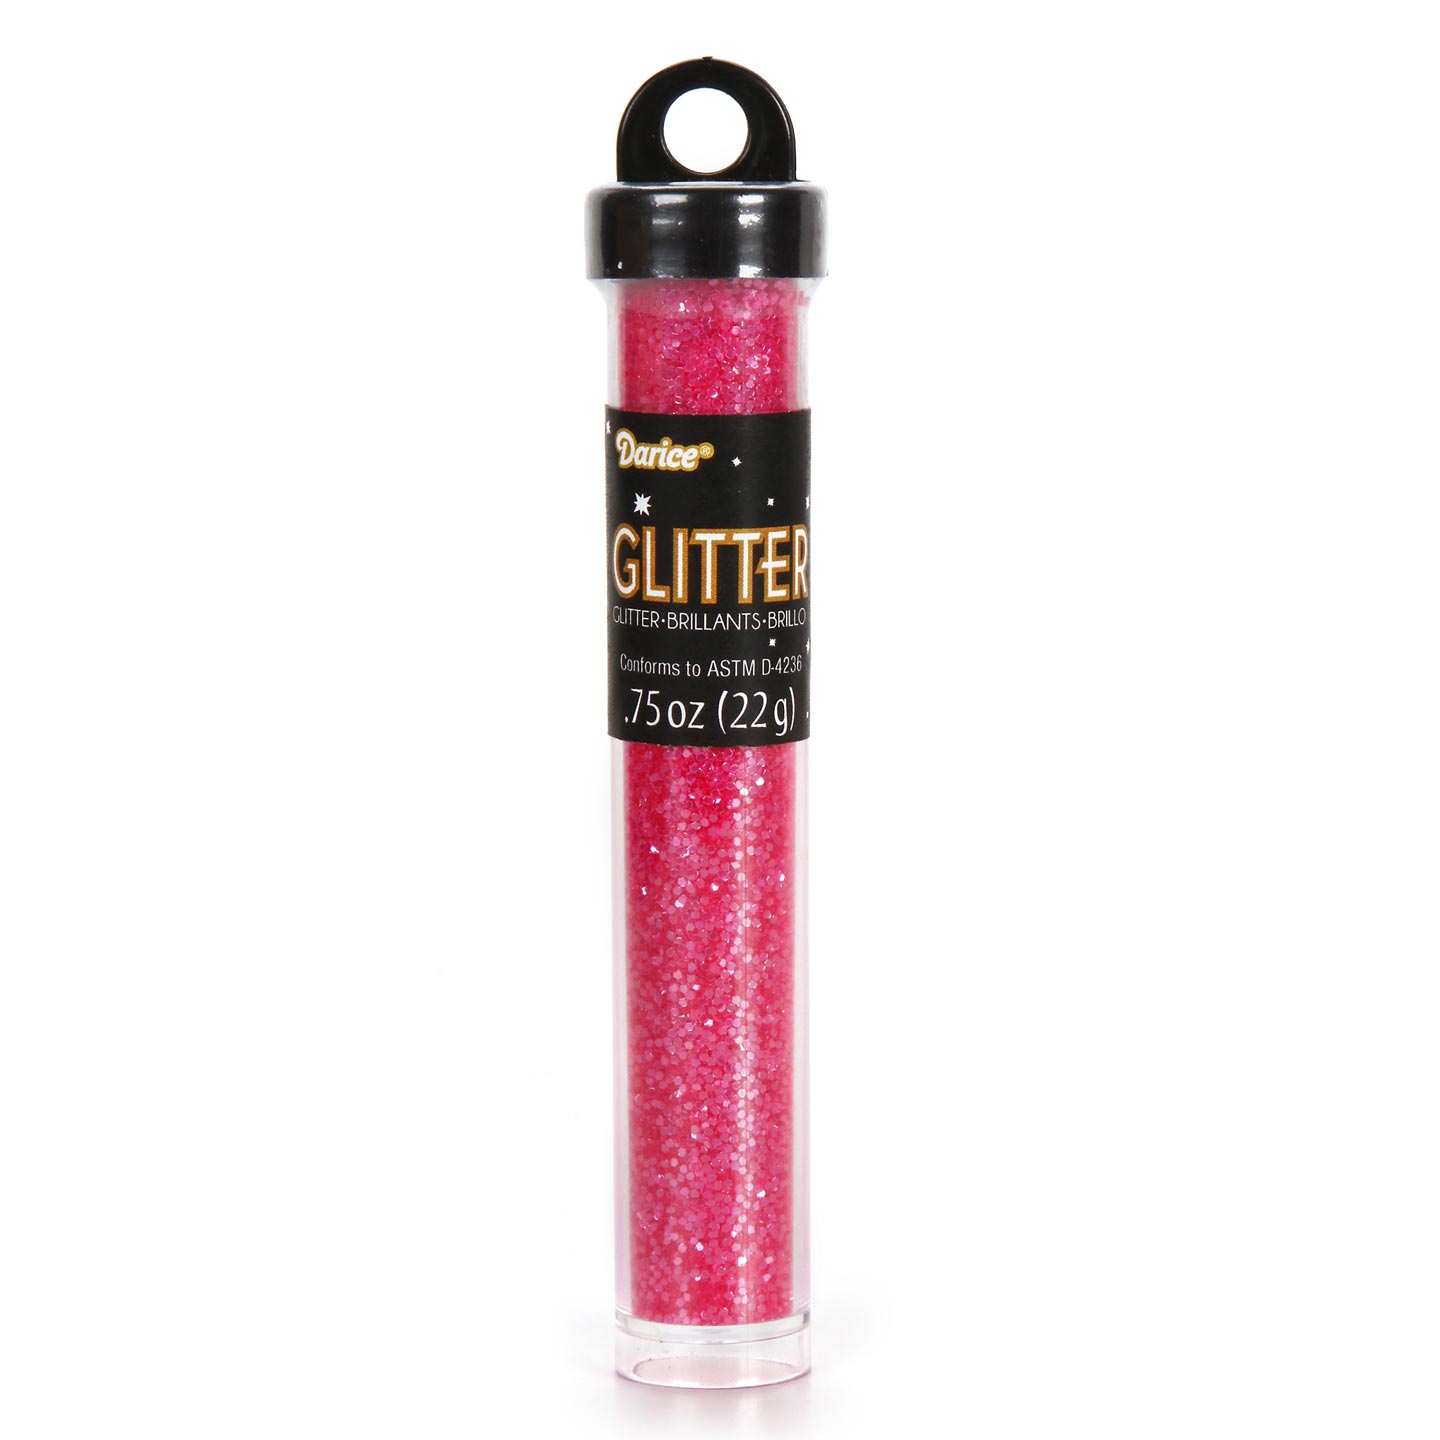 Glitters - Glitter Dust - Sparkle Dust - Diamond Dust - Loose Glitter - Craft Glitter